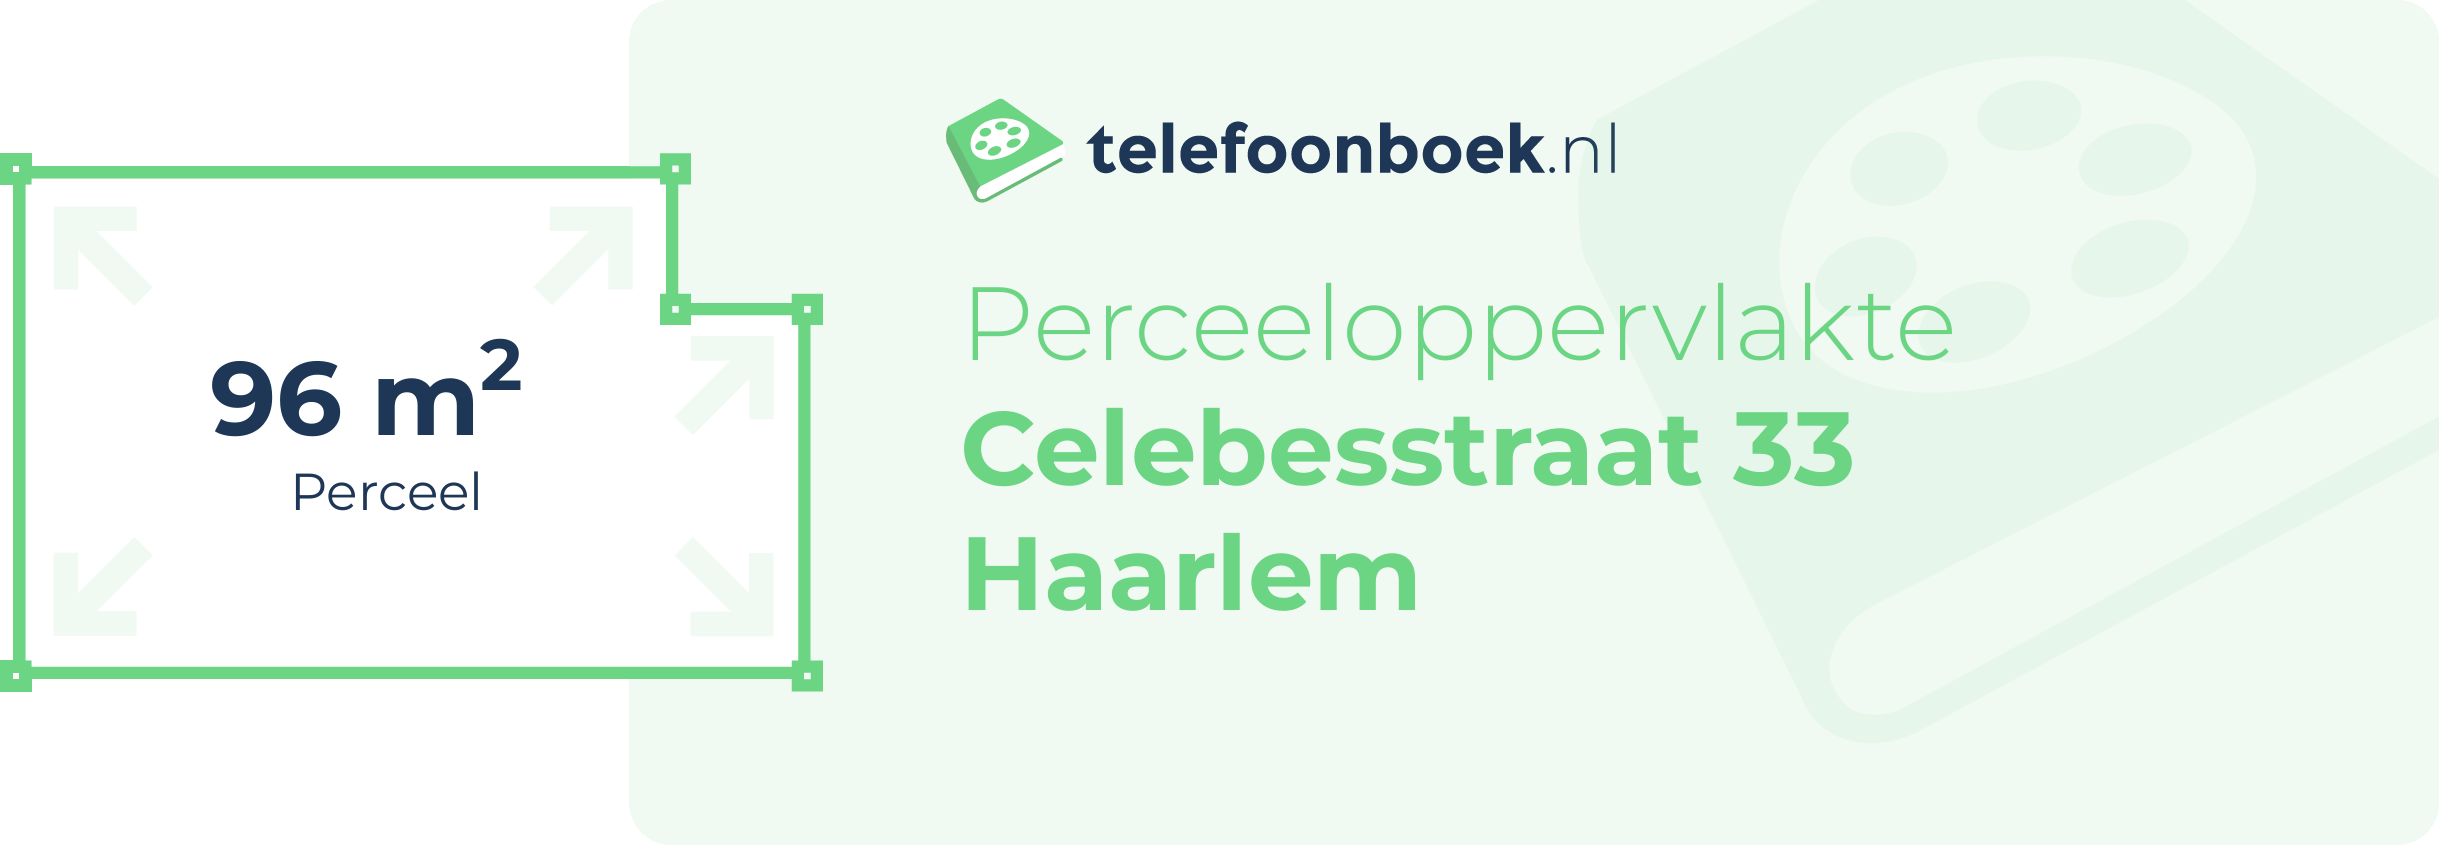 Perceeloppervlakte Celebesstraat 33 Haarlem